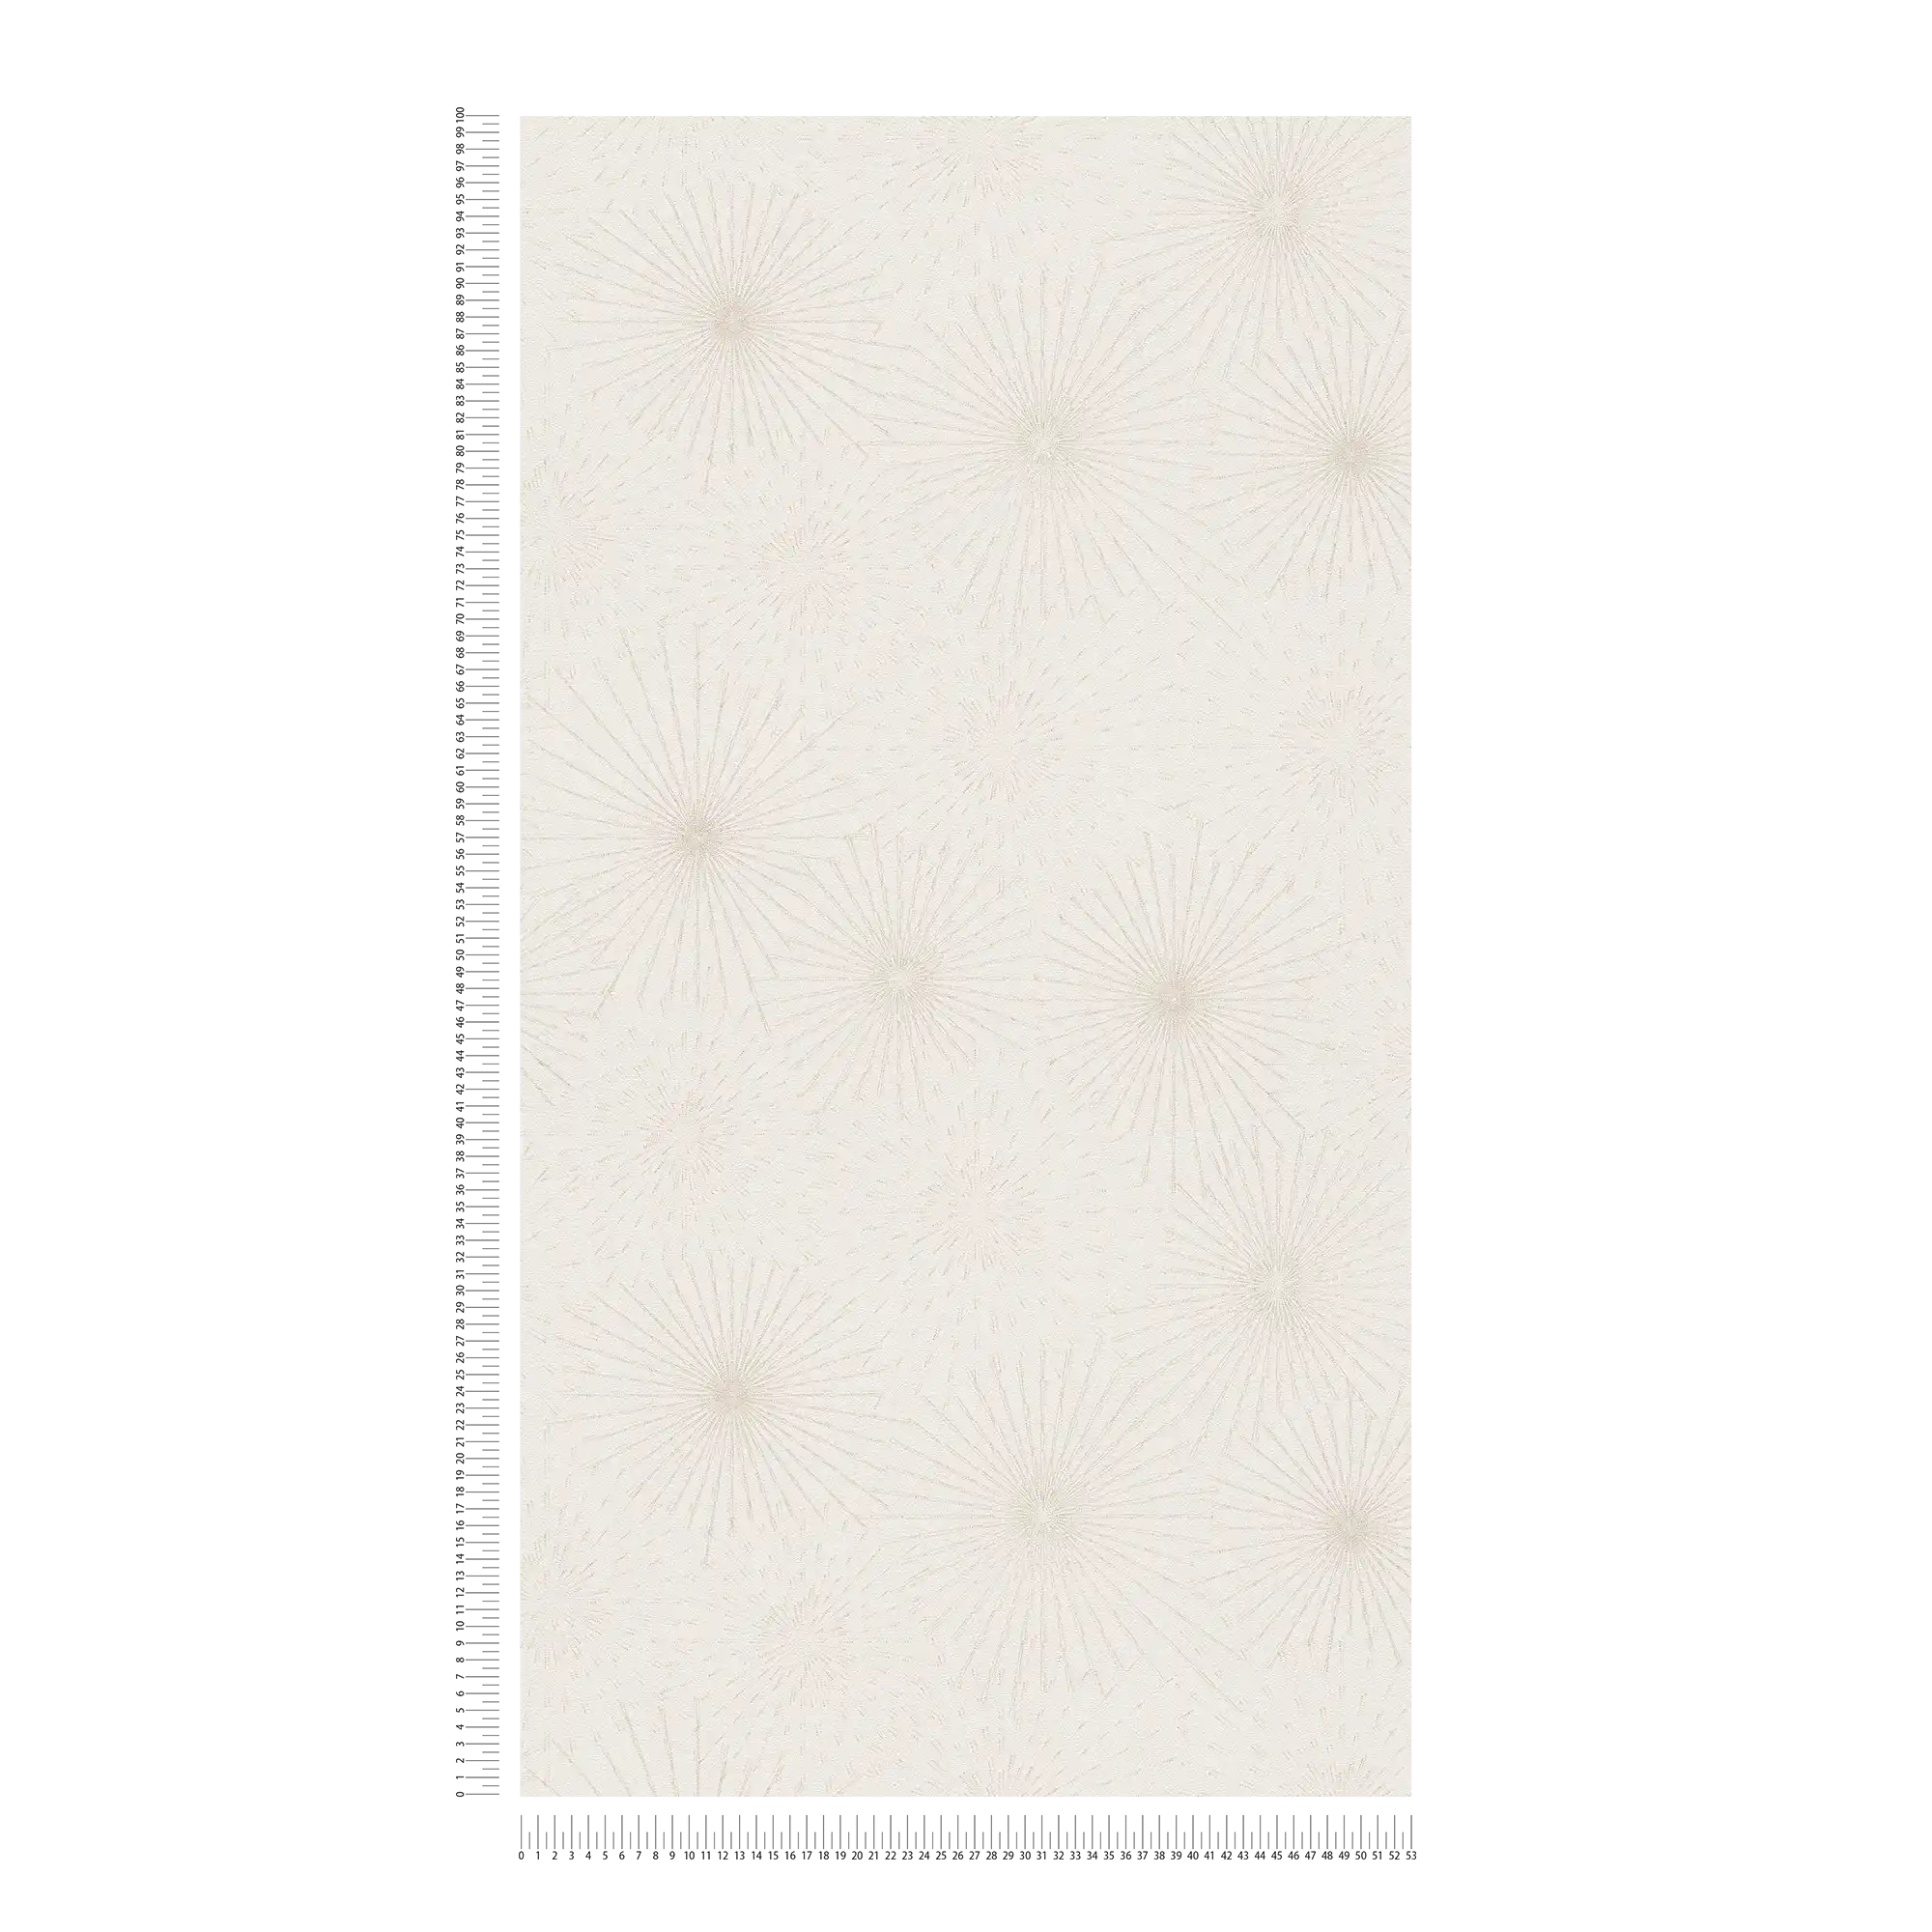             Wit behang met retro metallic patroon Starburst - wit
        